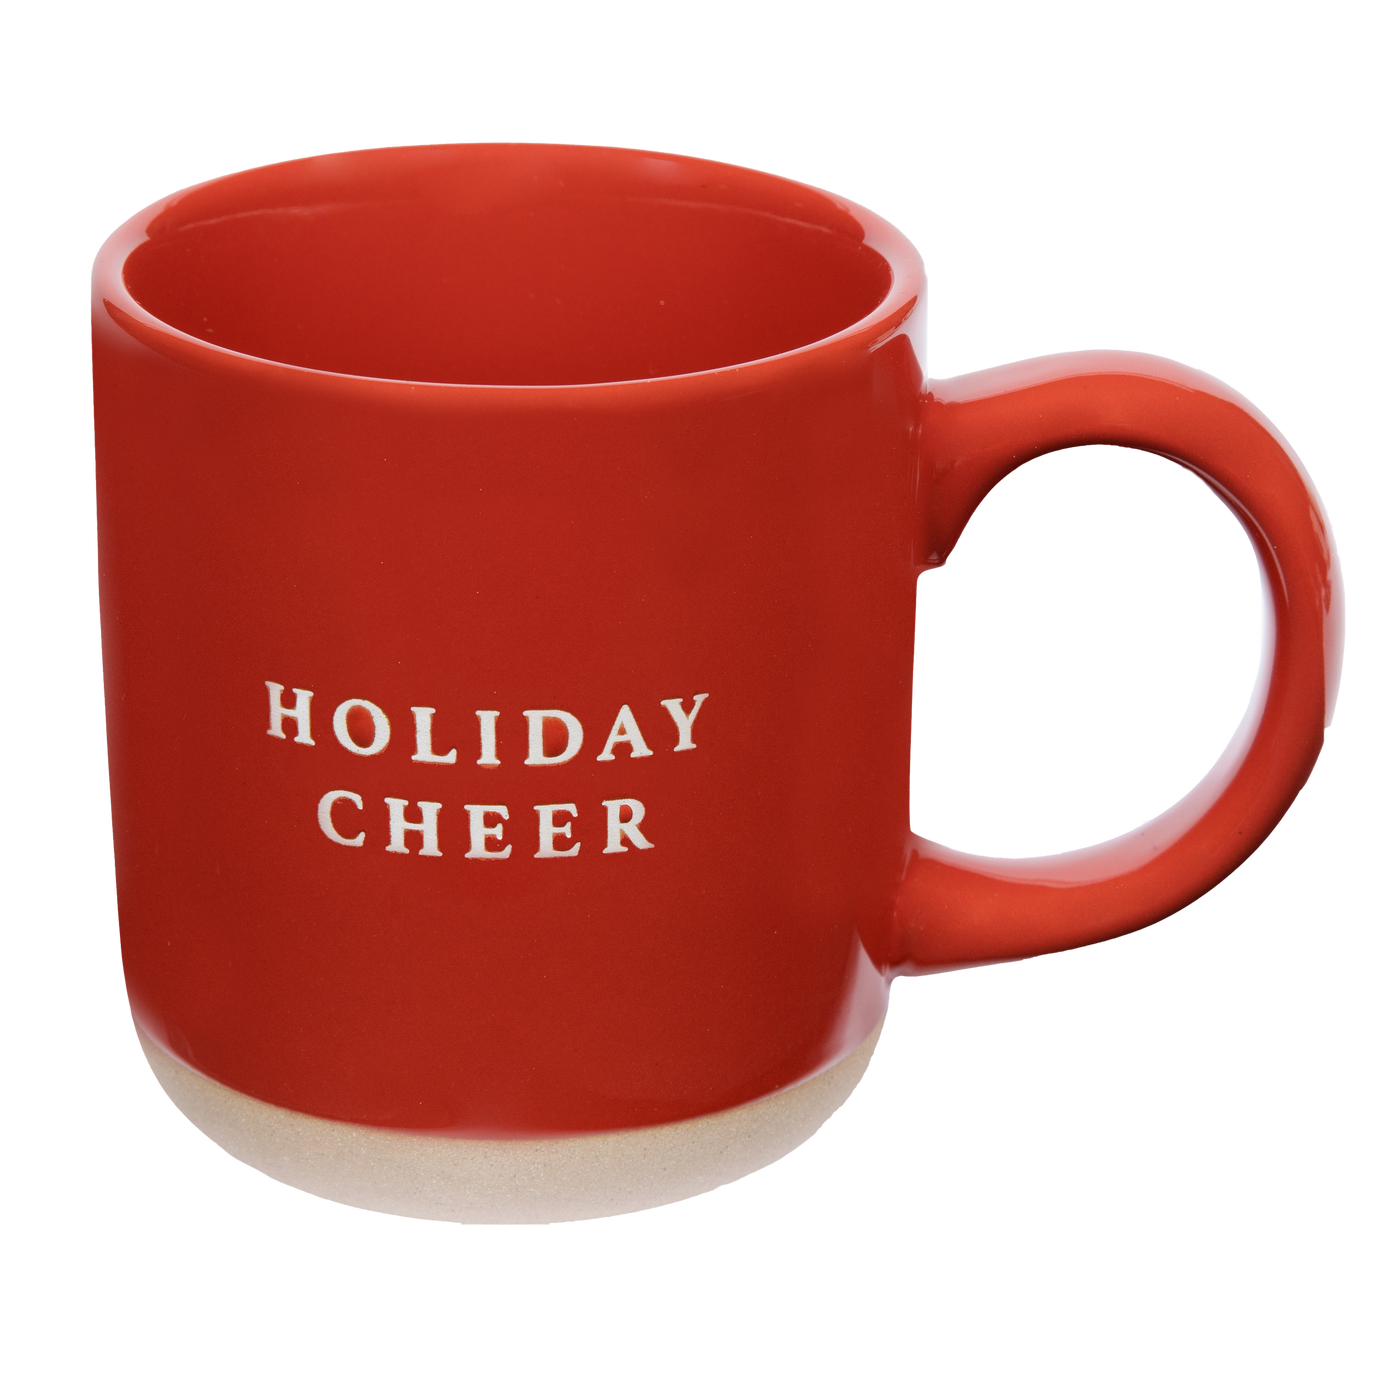 Holiday Cheer 14oz. Red Stoneware Coffee Mug